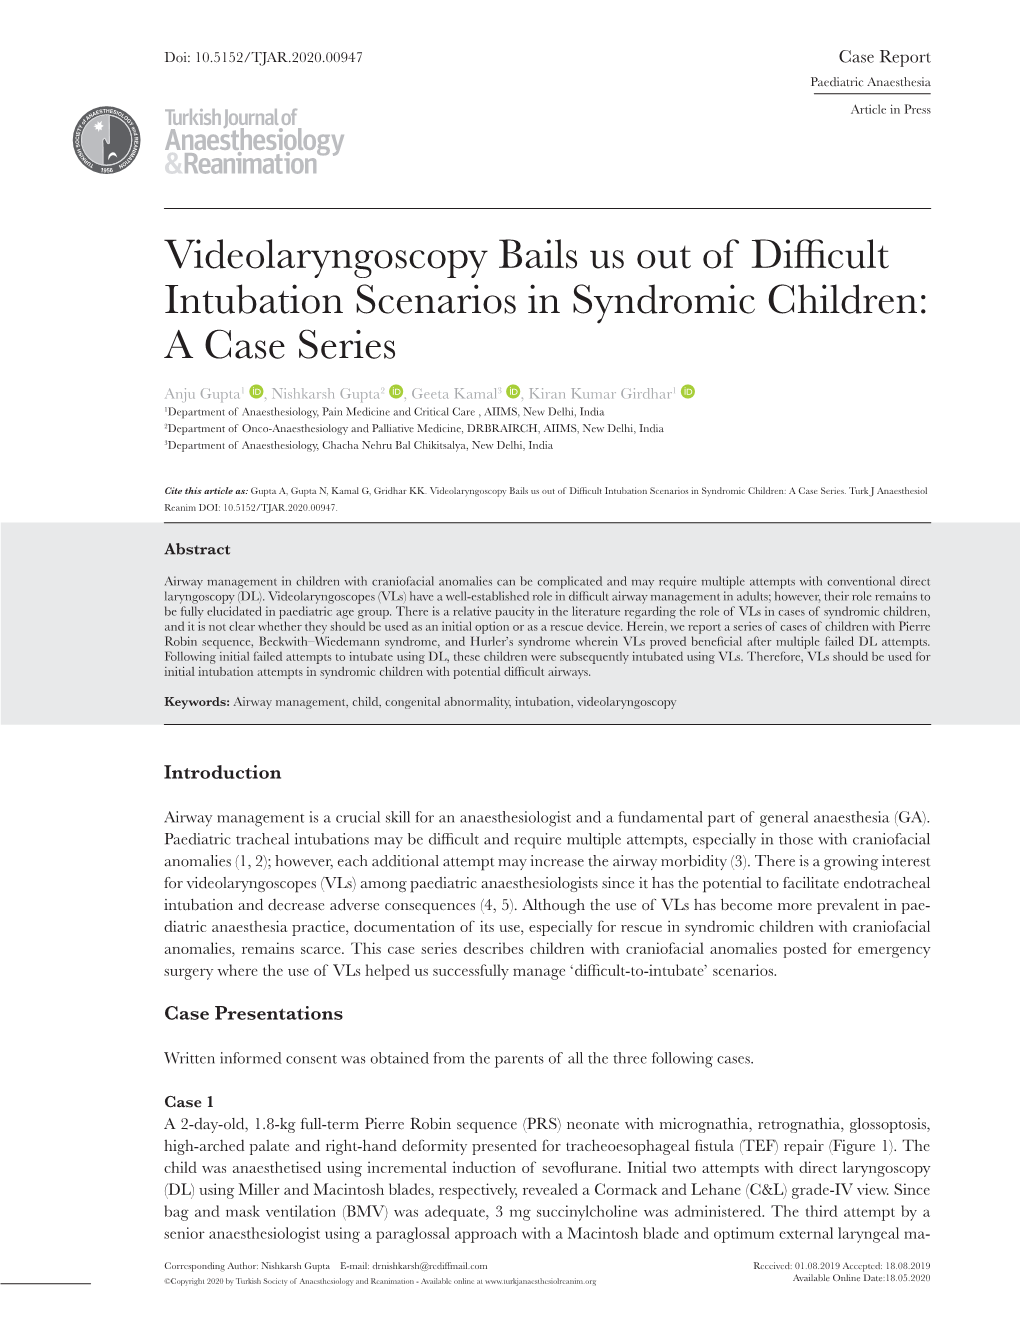 Videolaryngoscopy Bails Us out of Difficult Intubation Scenarios In